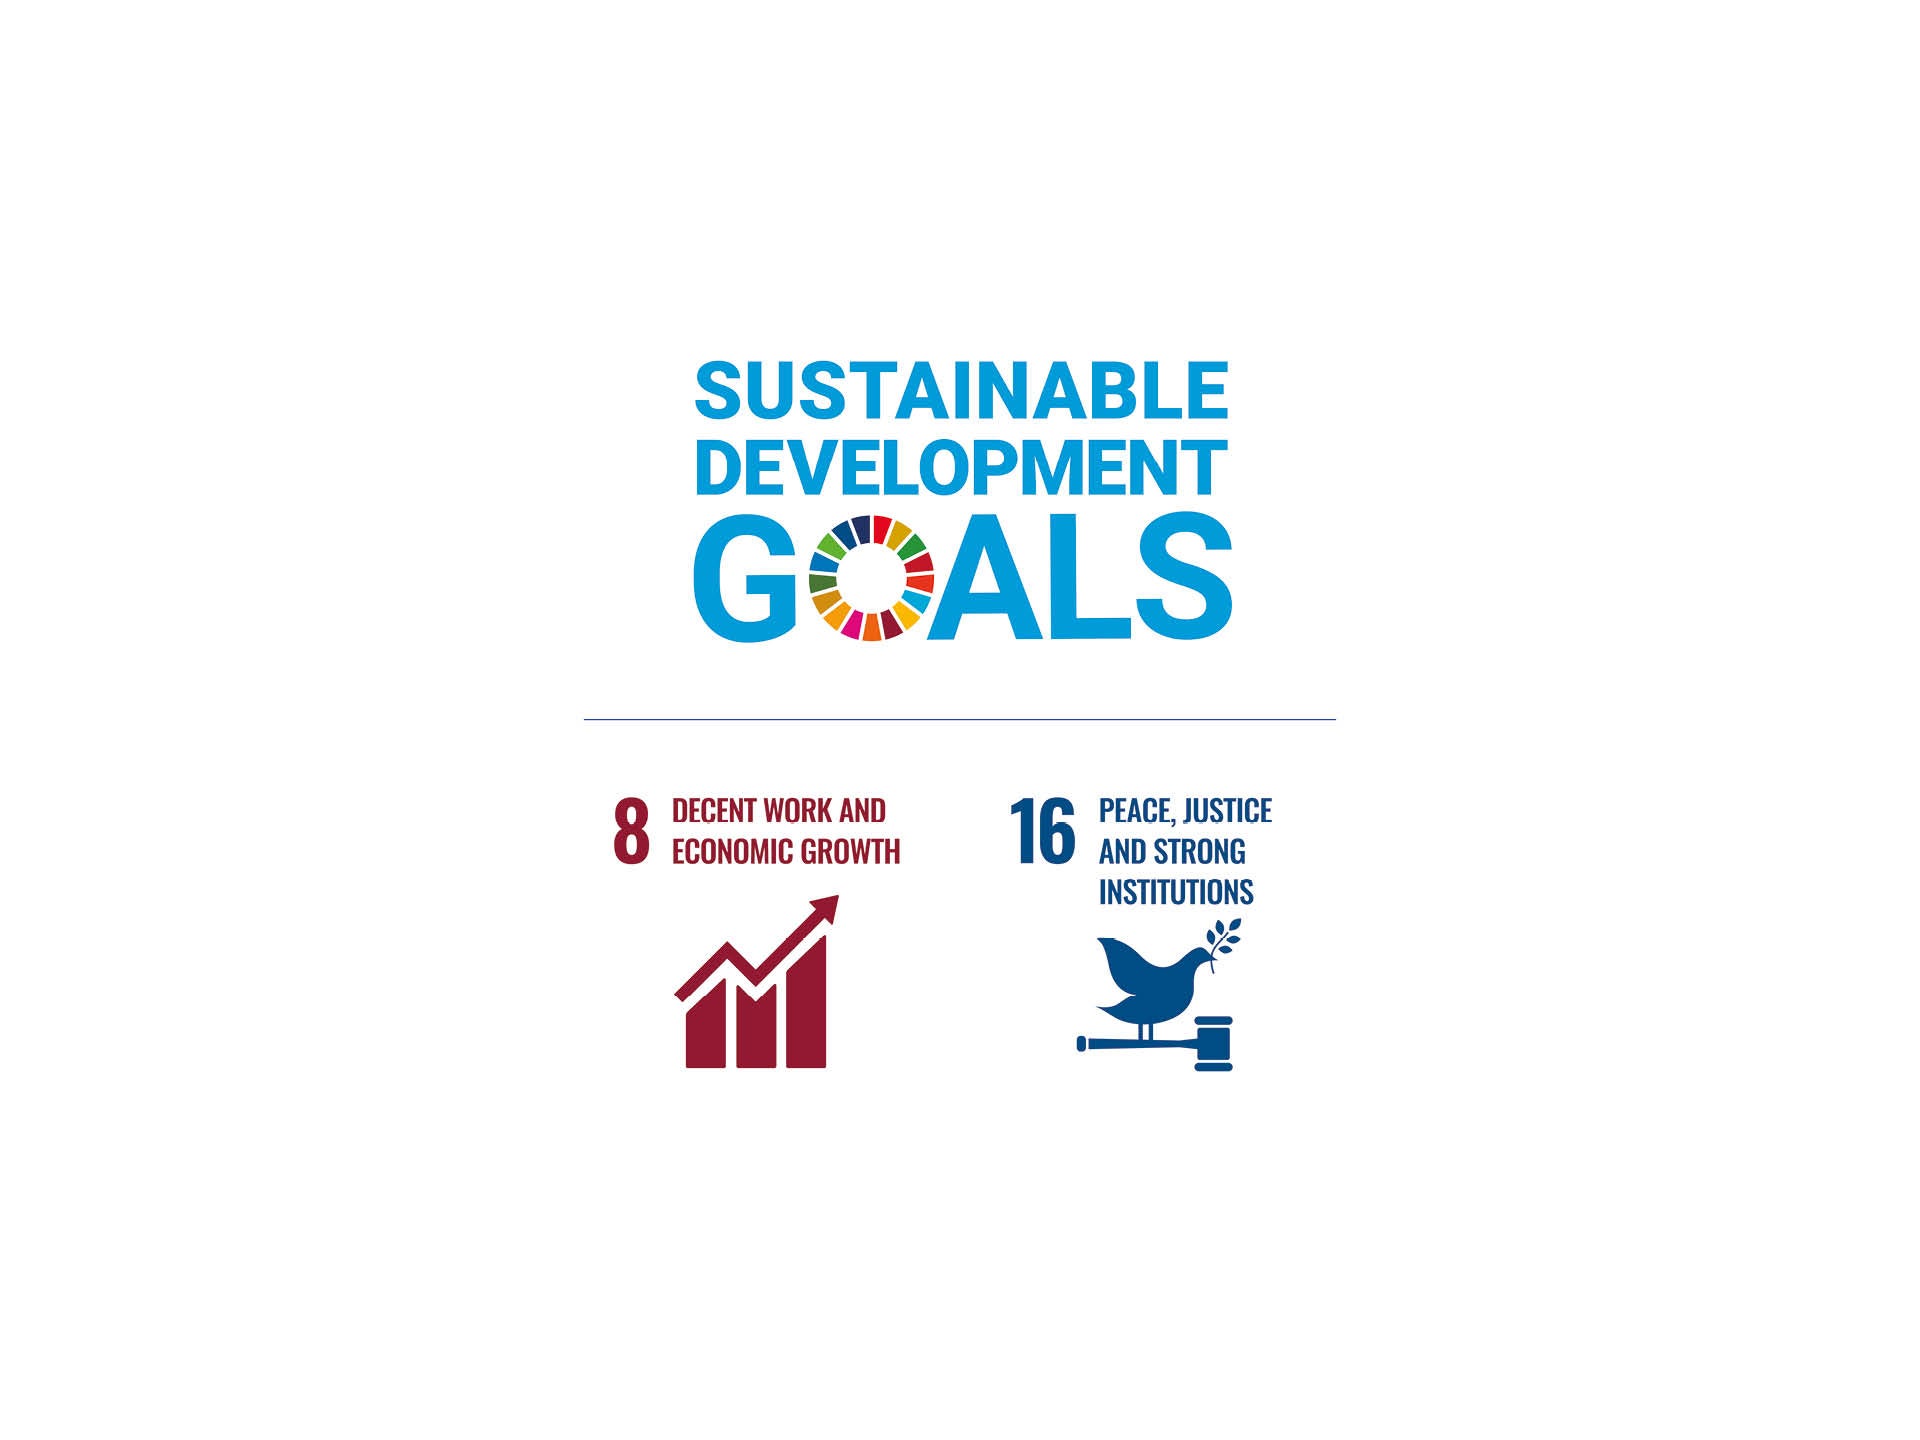 United Nations’ Sustainable Development Goals 8, 16